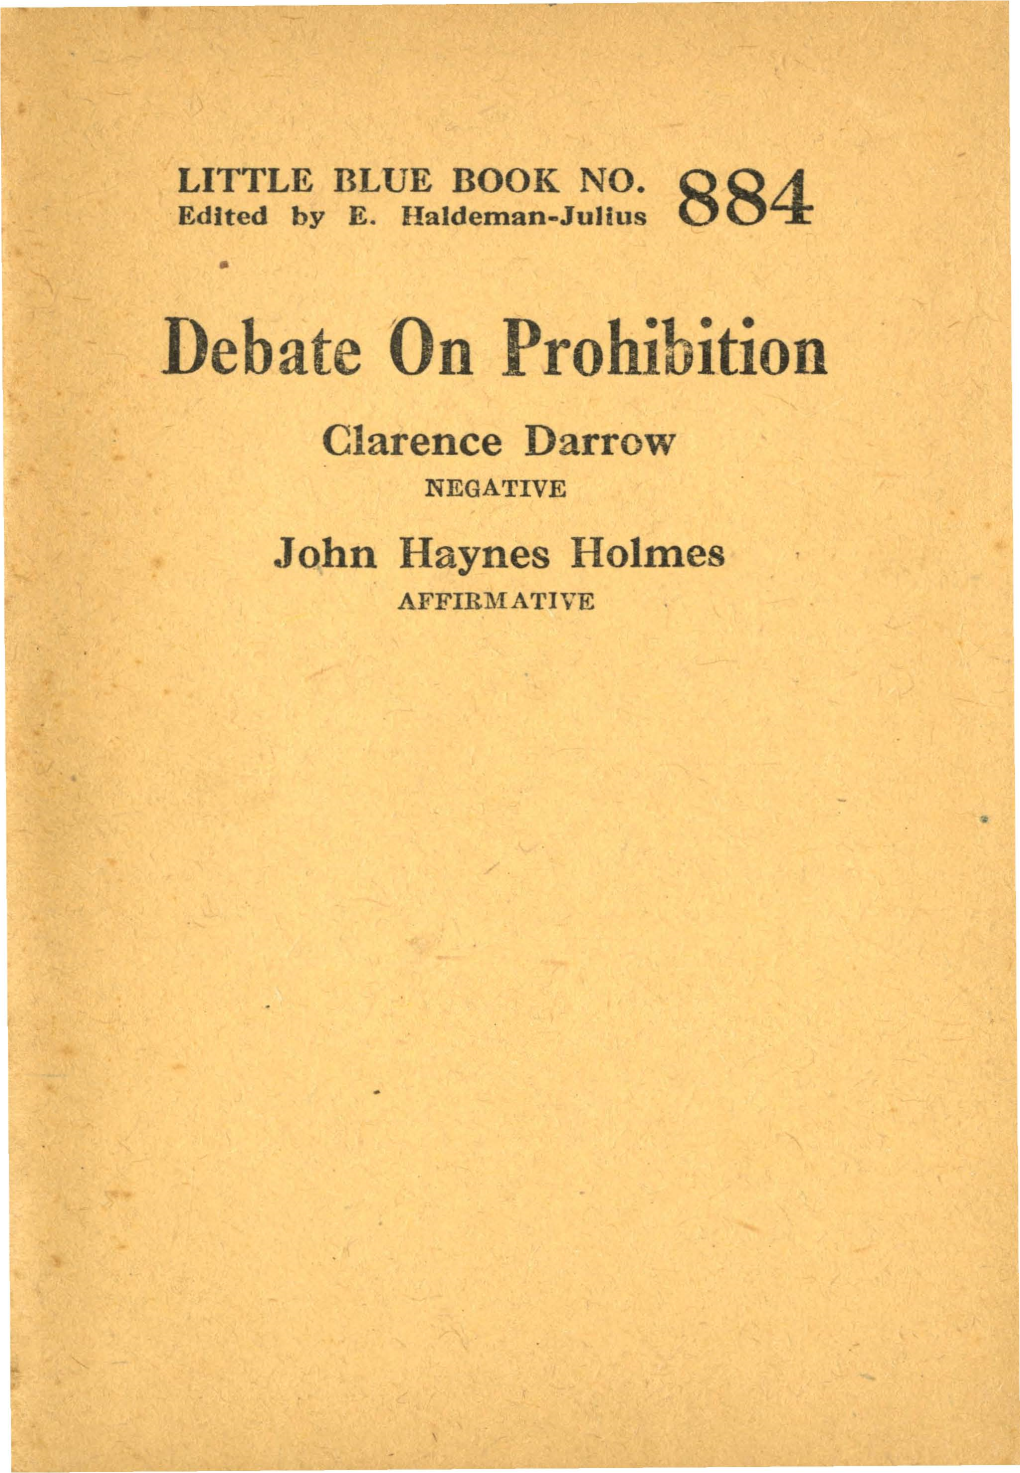 Debate on Prohibition Clarence Darrow NEGATIVE John Haynes Holmes AFFIRMATIVE , I LITTLE BLUE BOOK NO